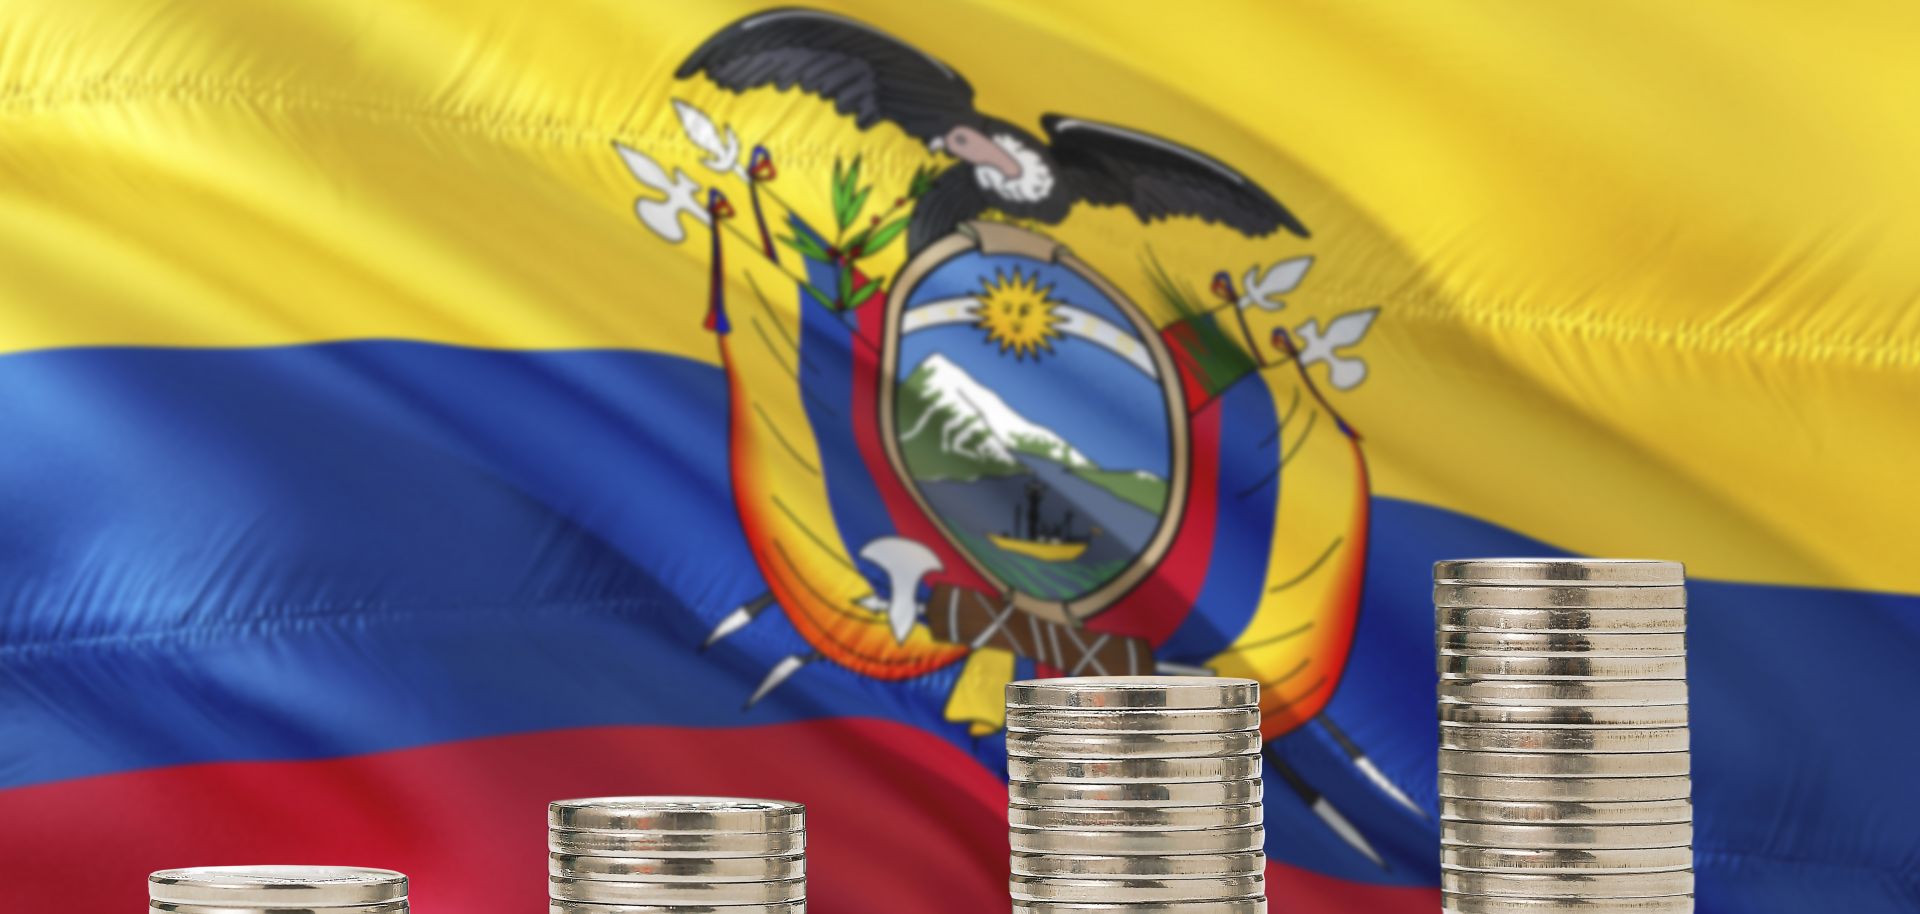 Ecuador's flag waves behind rows of coins.